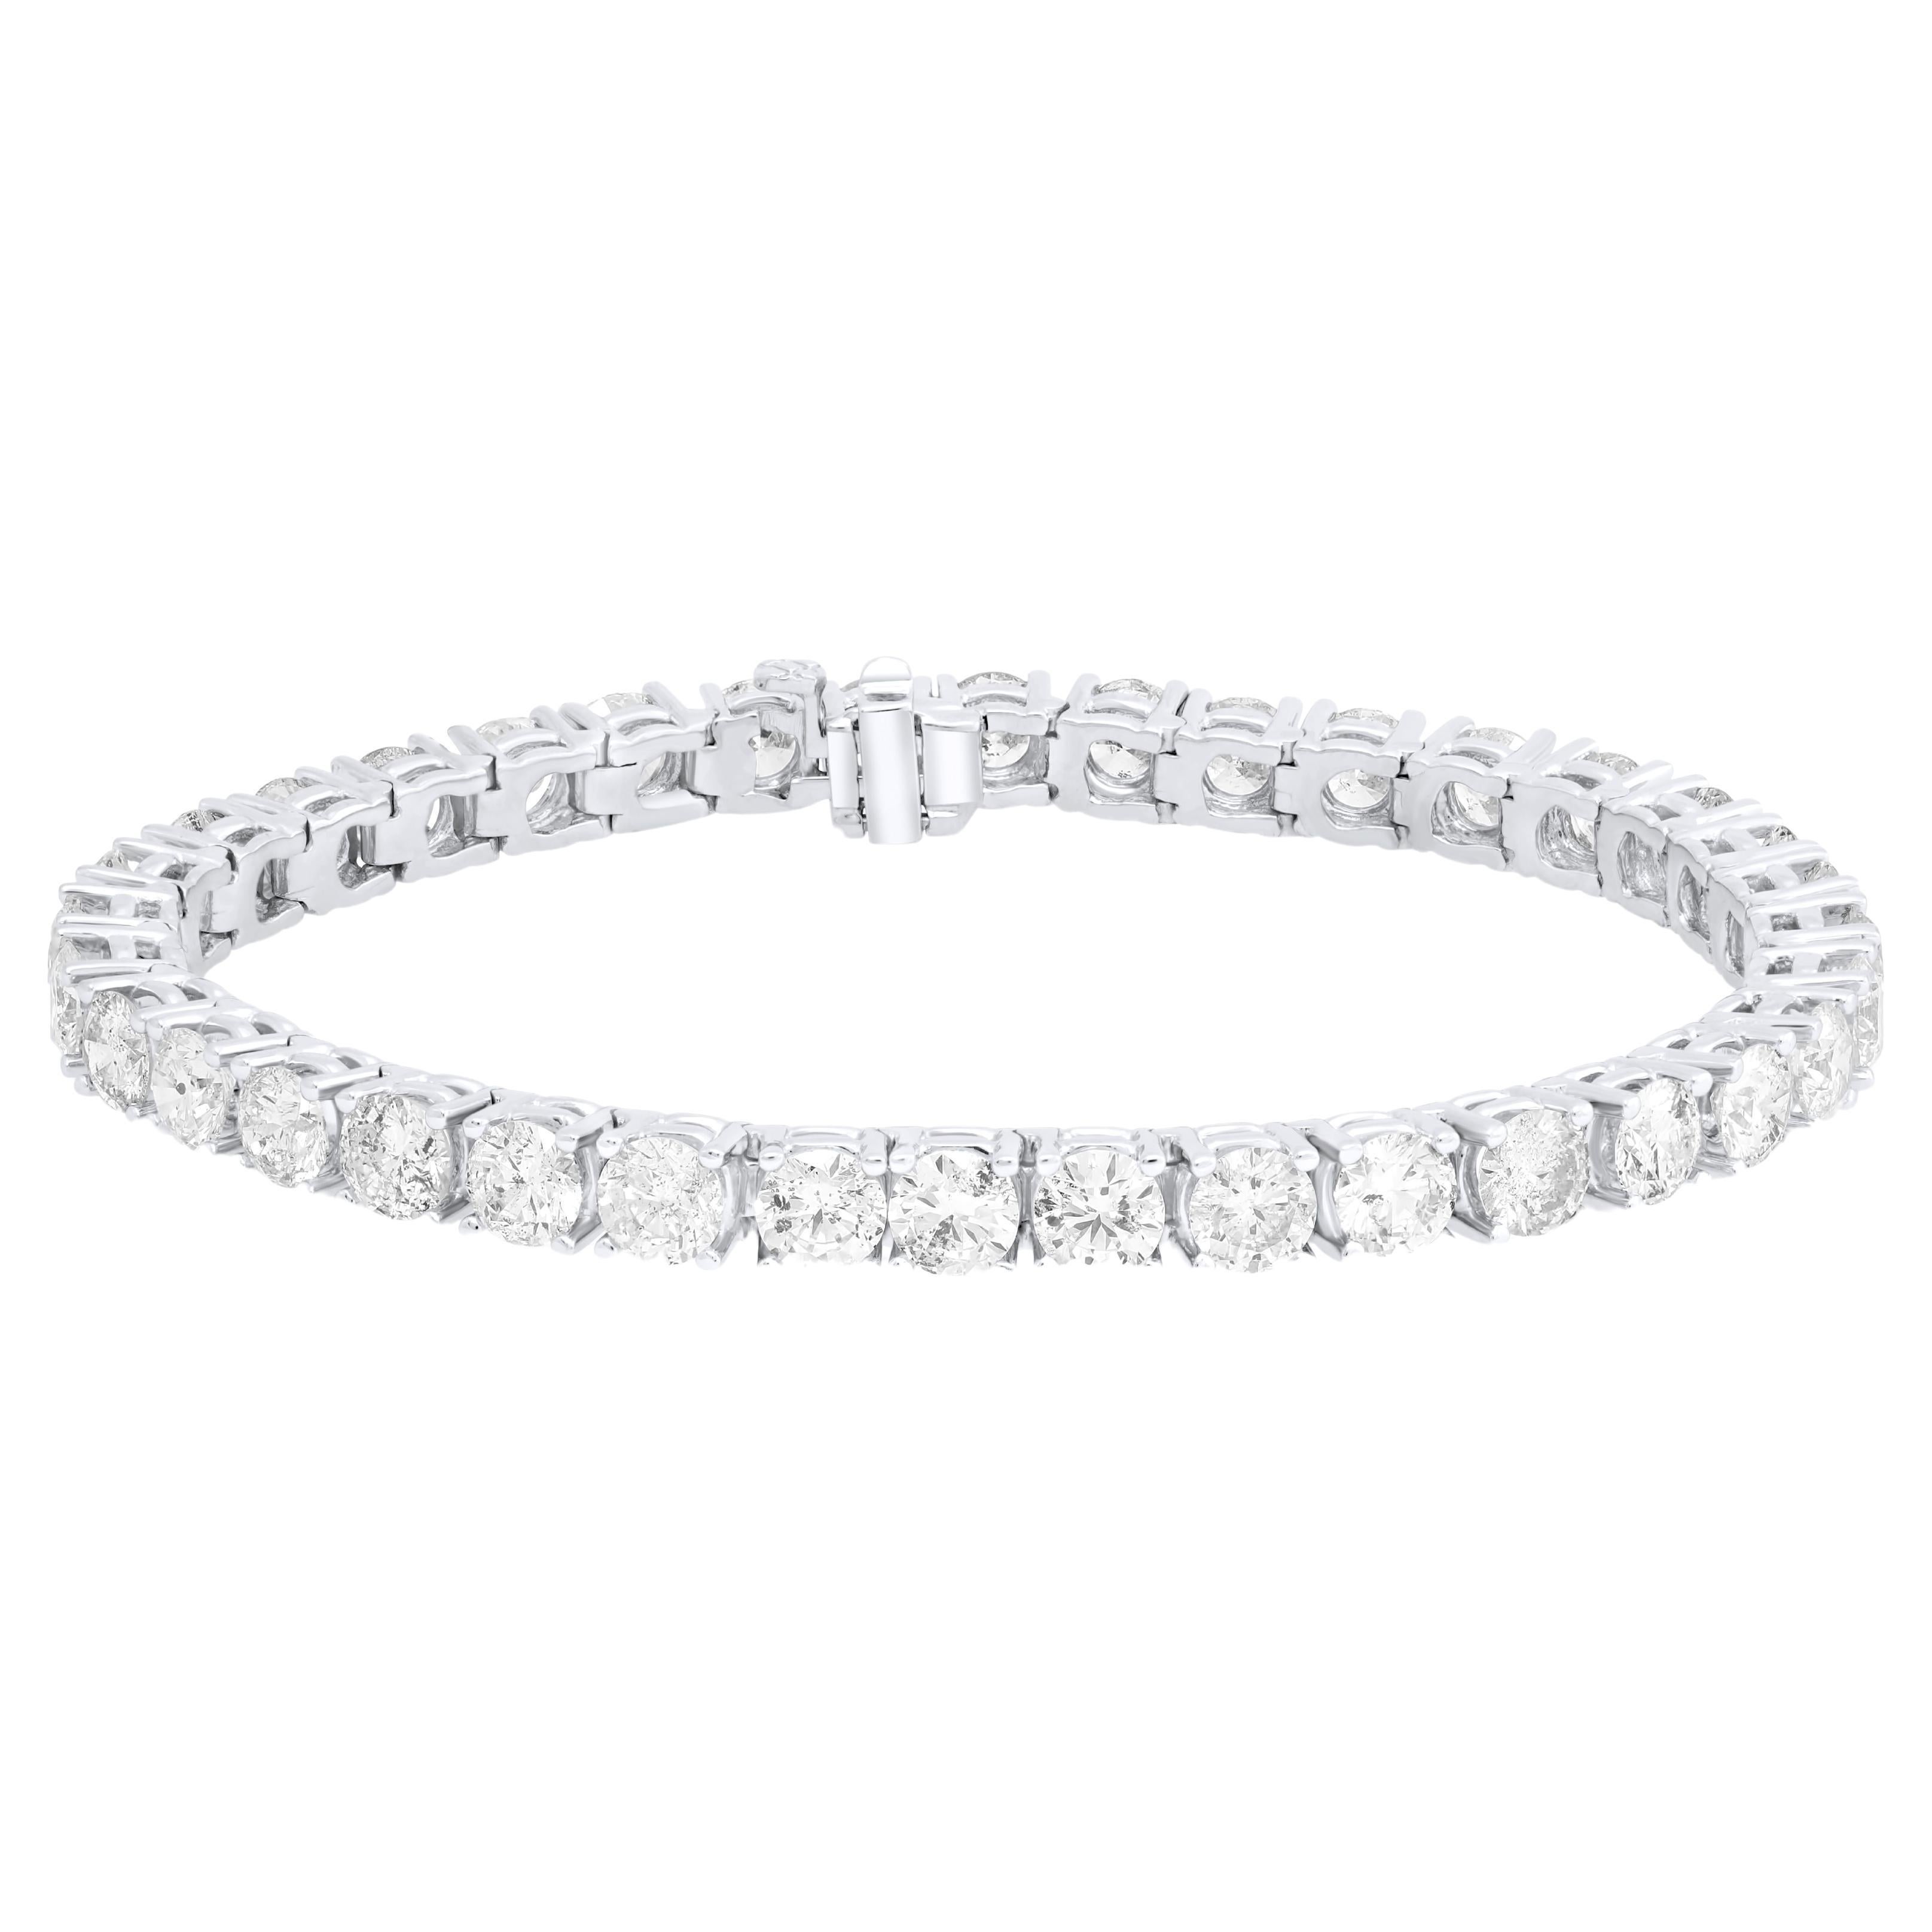 Diana M. Custom 8.75 Carat 4 Prong Diamond Tennis Bracelet with 18kt  White Gold For Sale